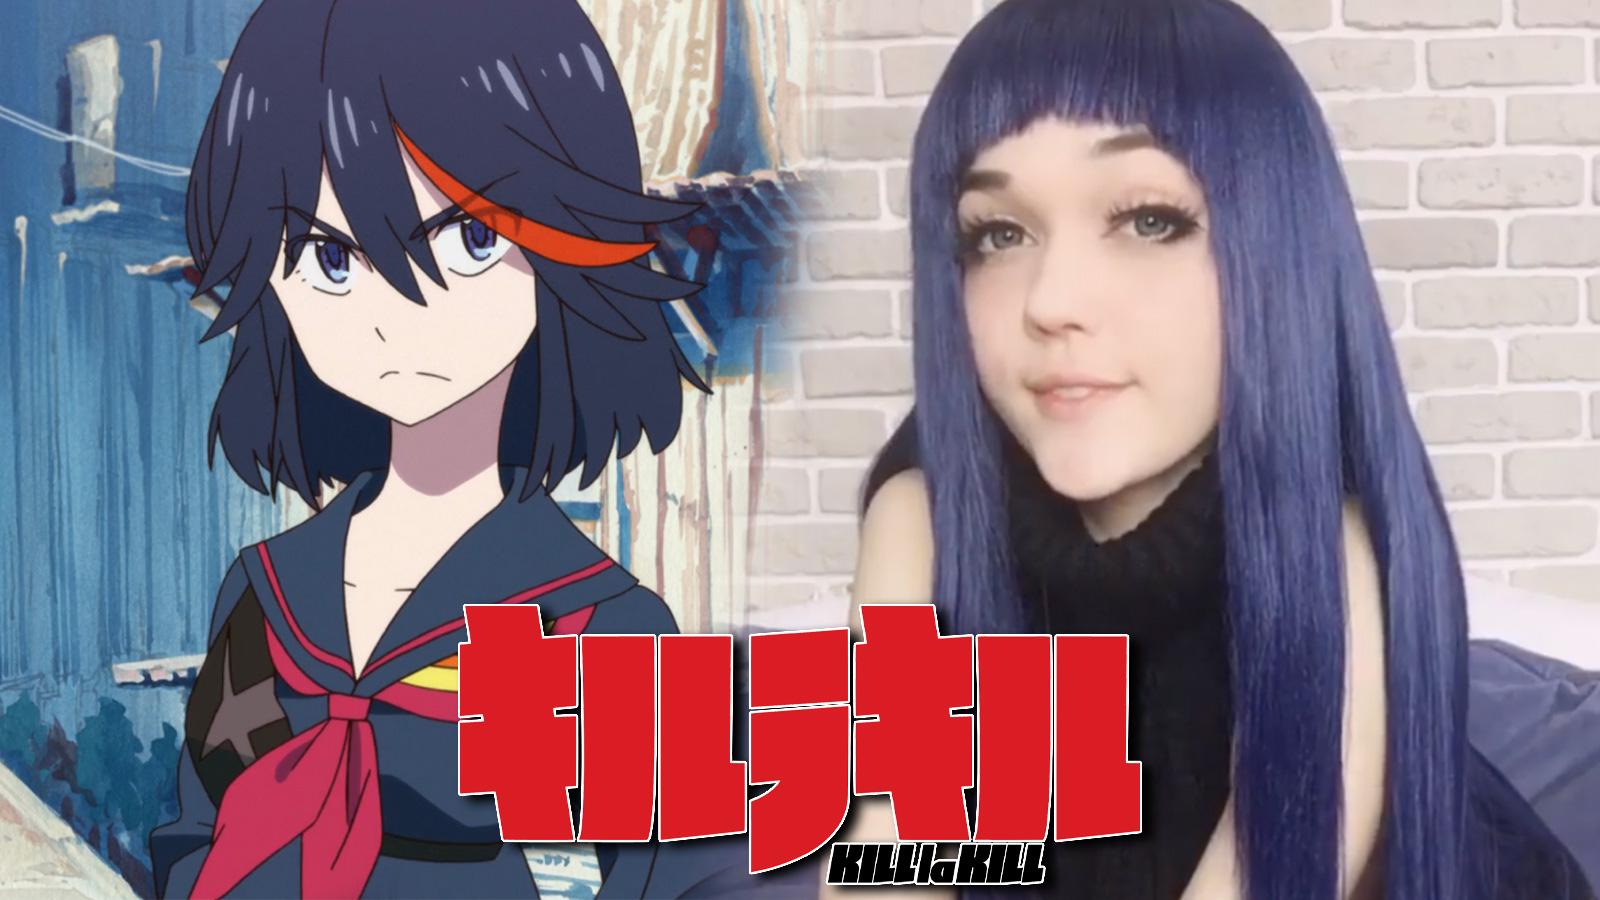 Screenshot of Ryuko Matoi from Kill La Kill anime next to cosplayer.